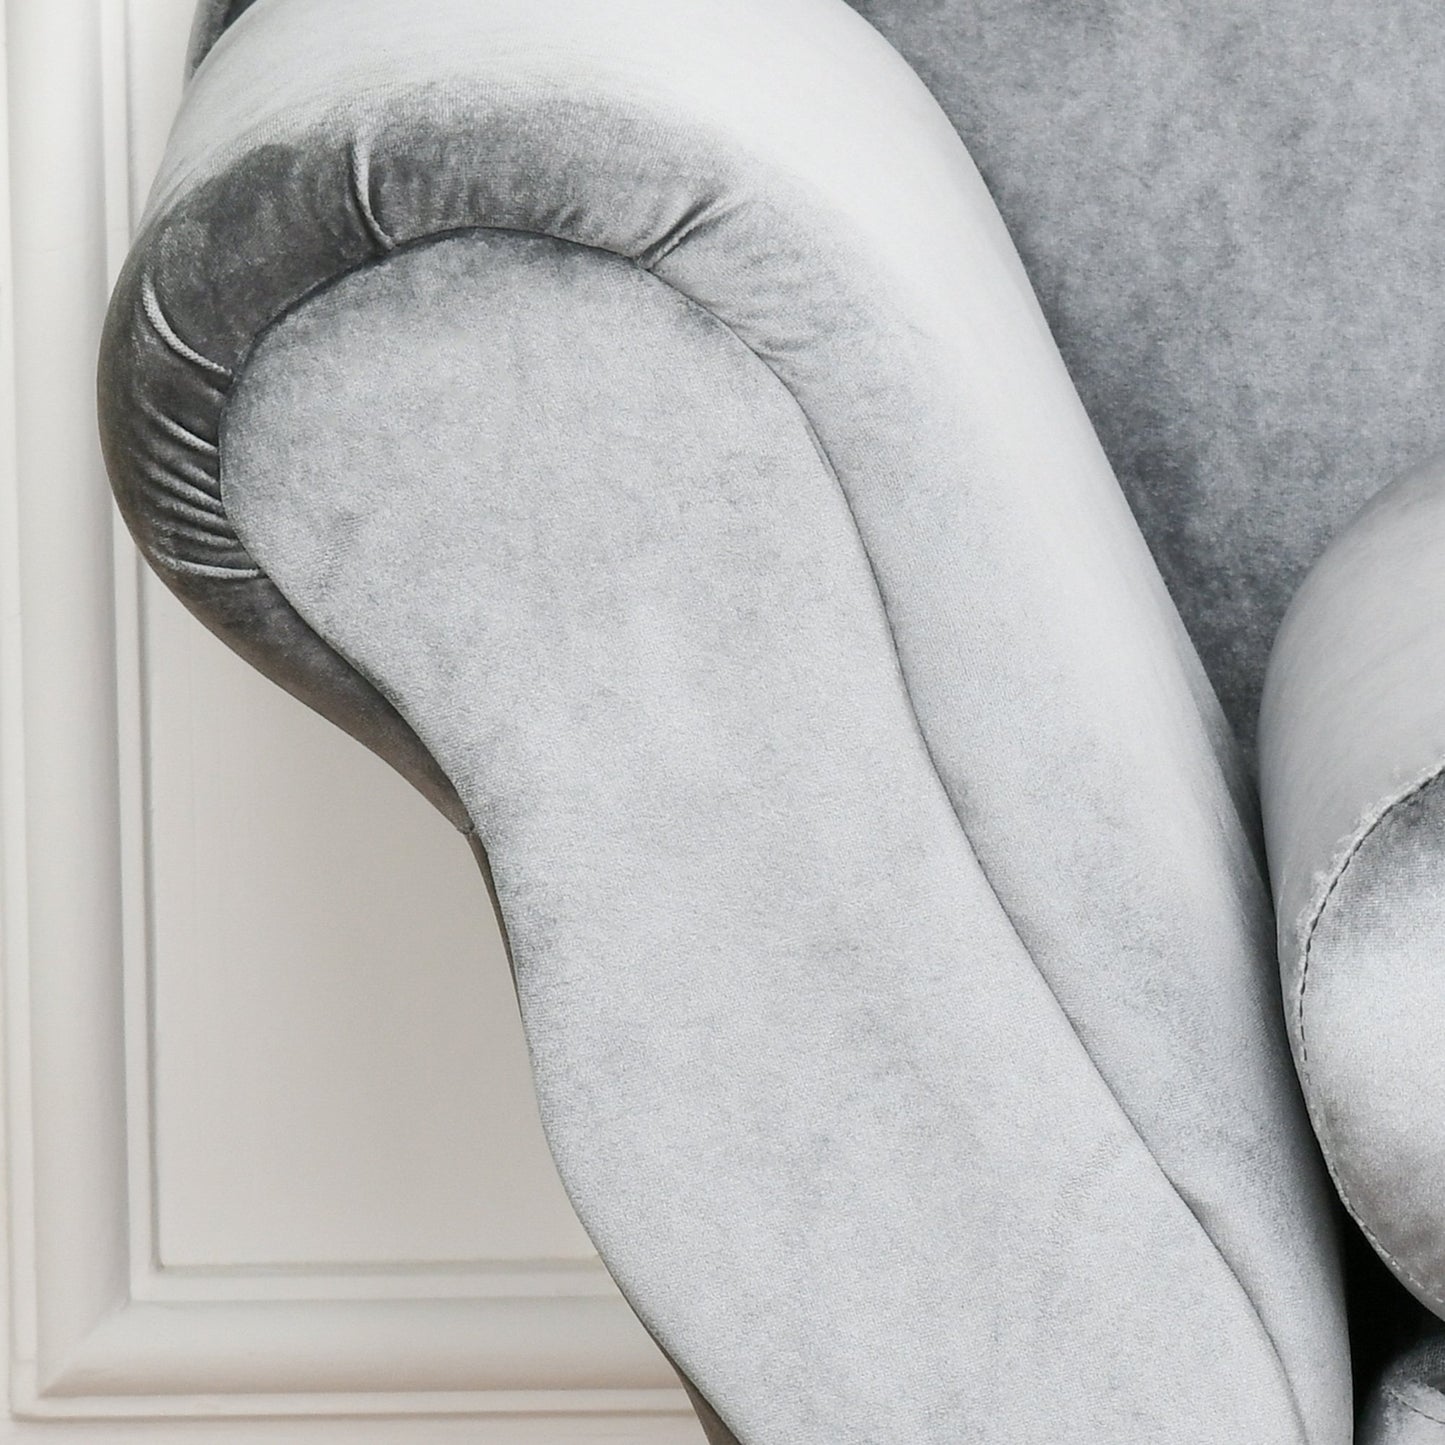 HOMCOM Vintage Style Plush Cloth Upholstered Chaise Longue Sofa w/ Bolster Cushion Grey